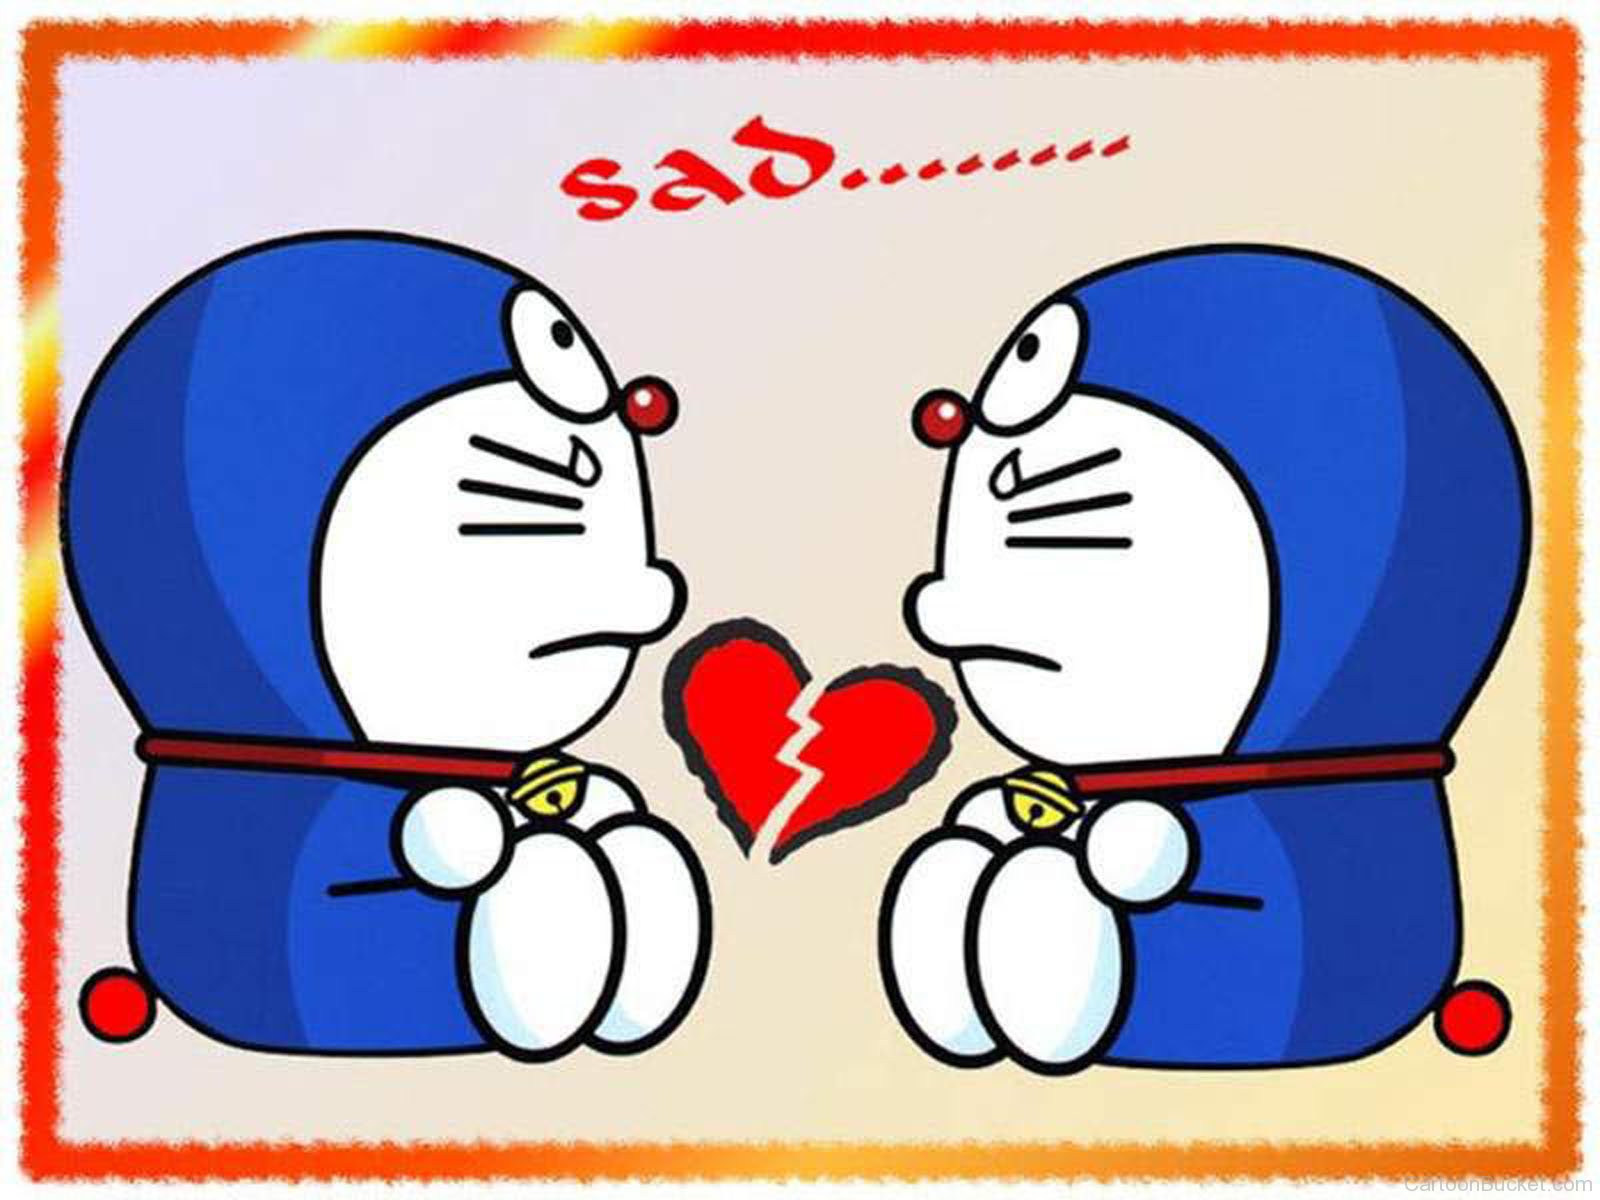 Doraemon Pictures Images Page 4